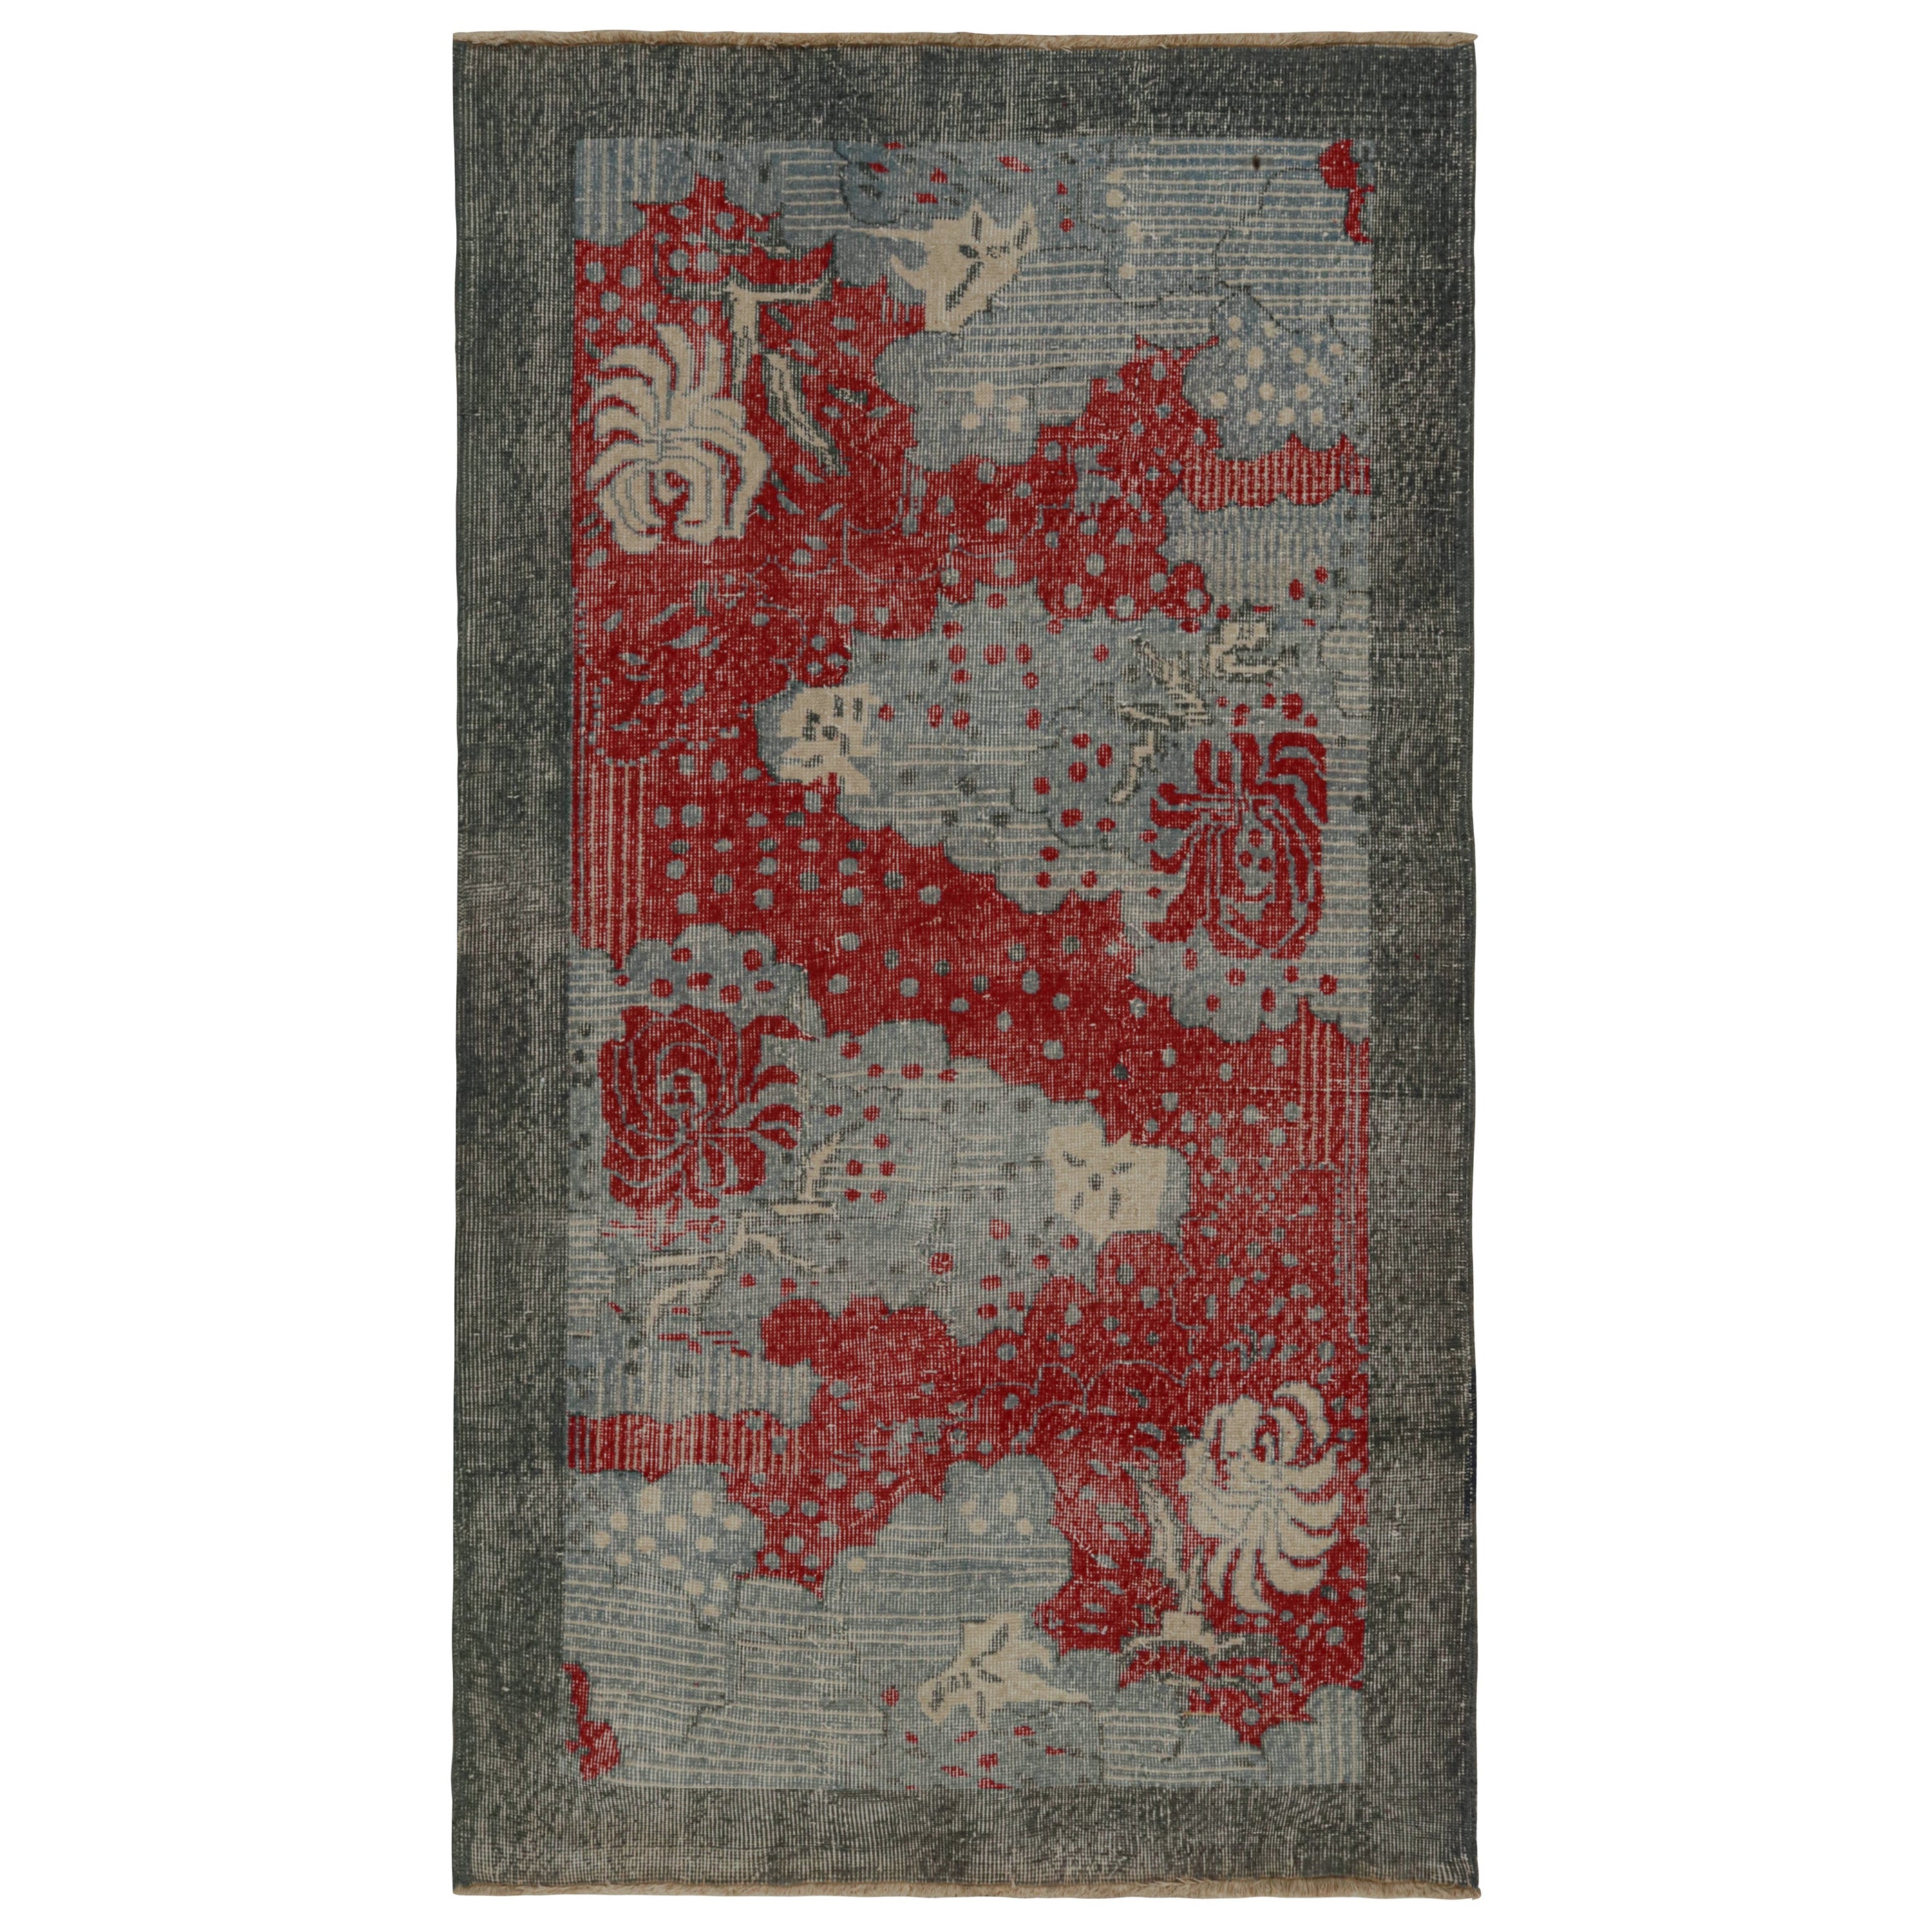 Vintage Zeki Müren Art Deco rug, with Abstract patterns, from Rug & Kilim For Sale